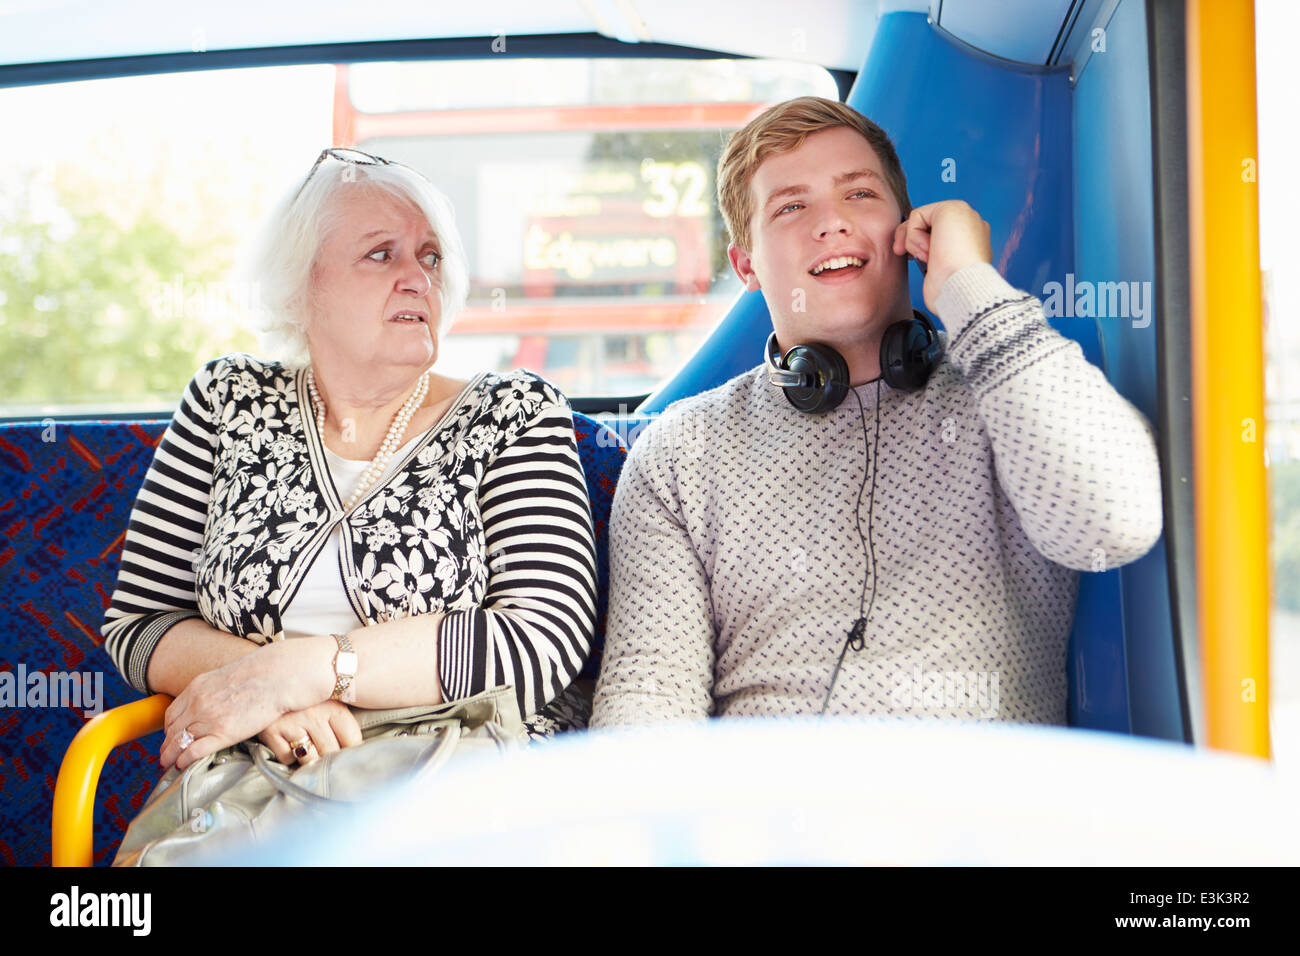 Man Disturbing Passengers On Bus Journey With Phone Call Stock Photo